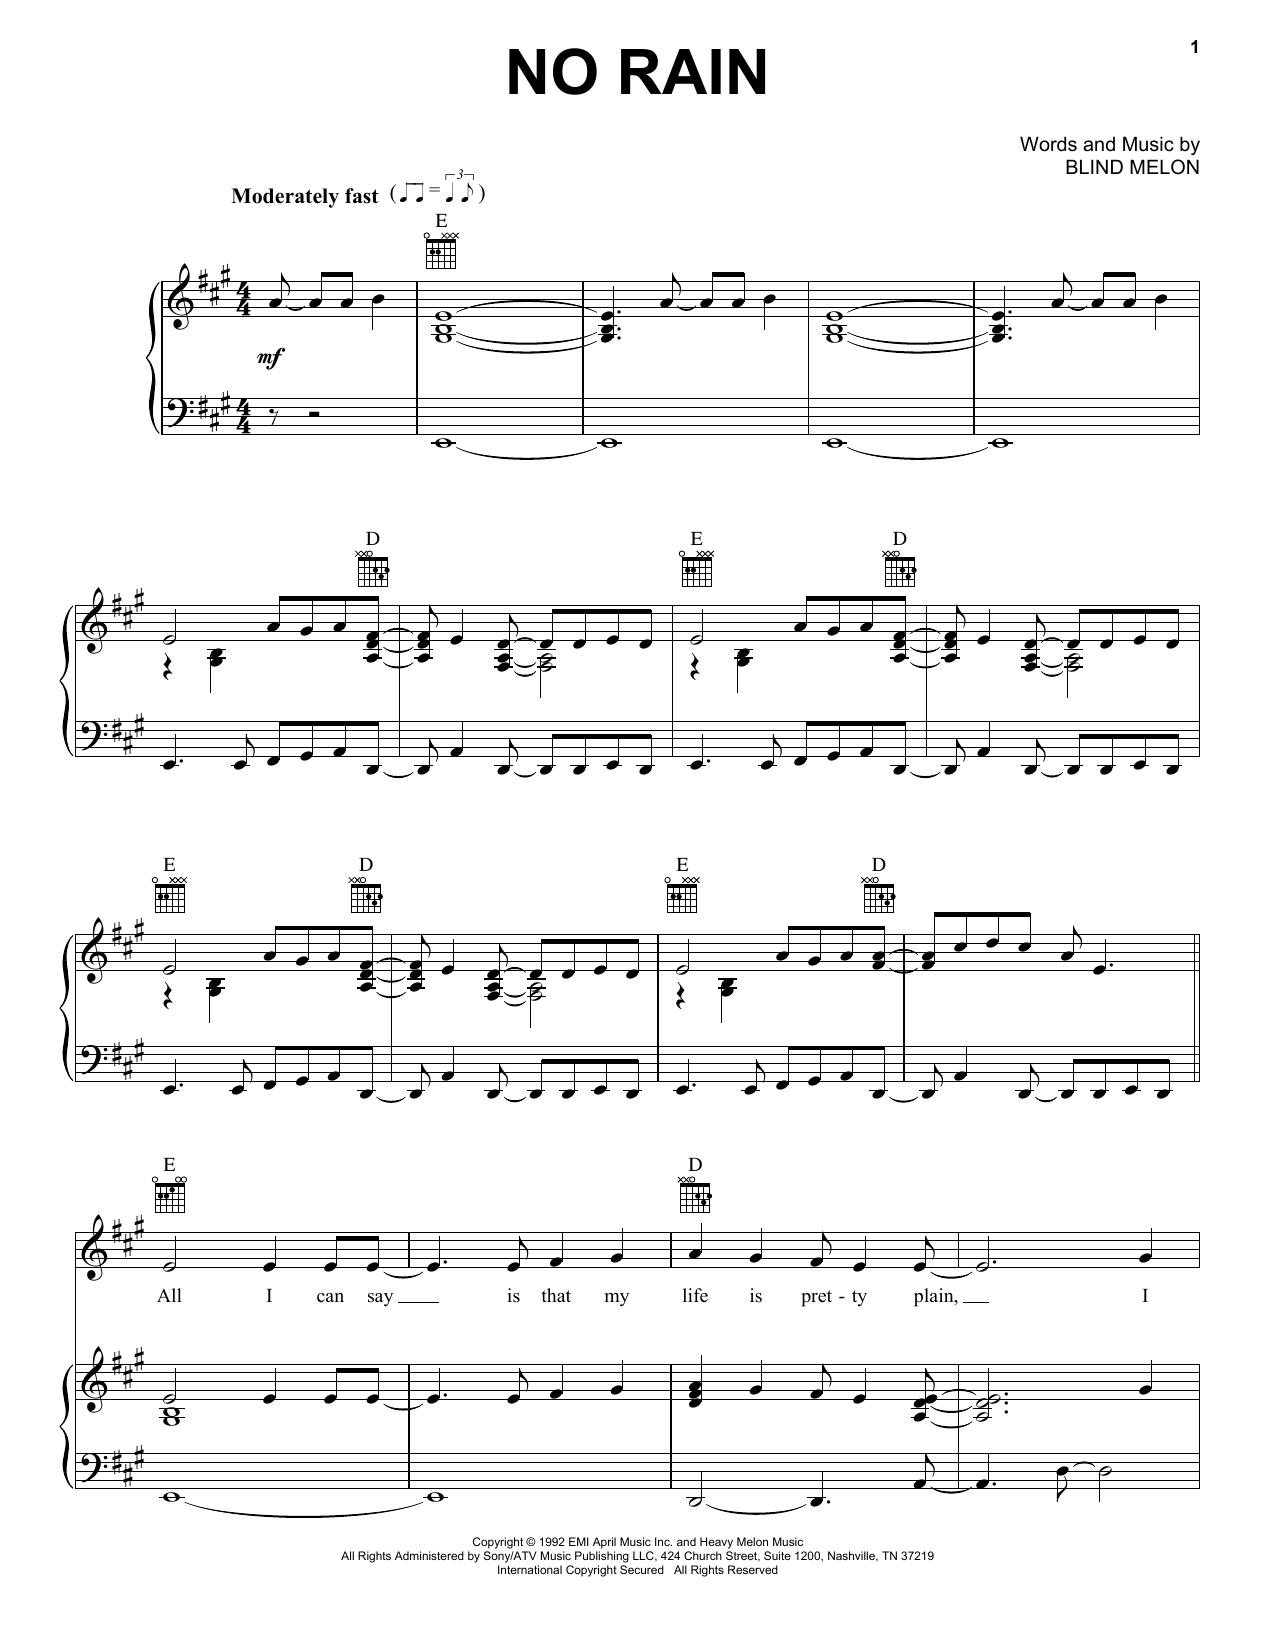 Blind Melon No Rain Sheet Music Notes & Chords for Real Book – Melody, Lyrics & Chords - Download or Print PDF